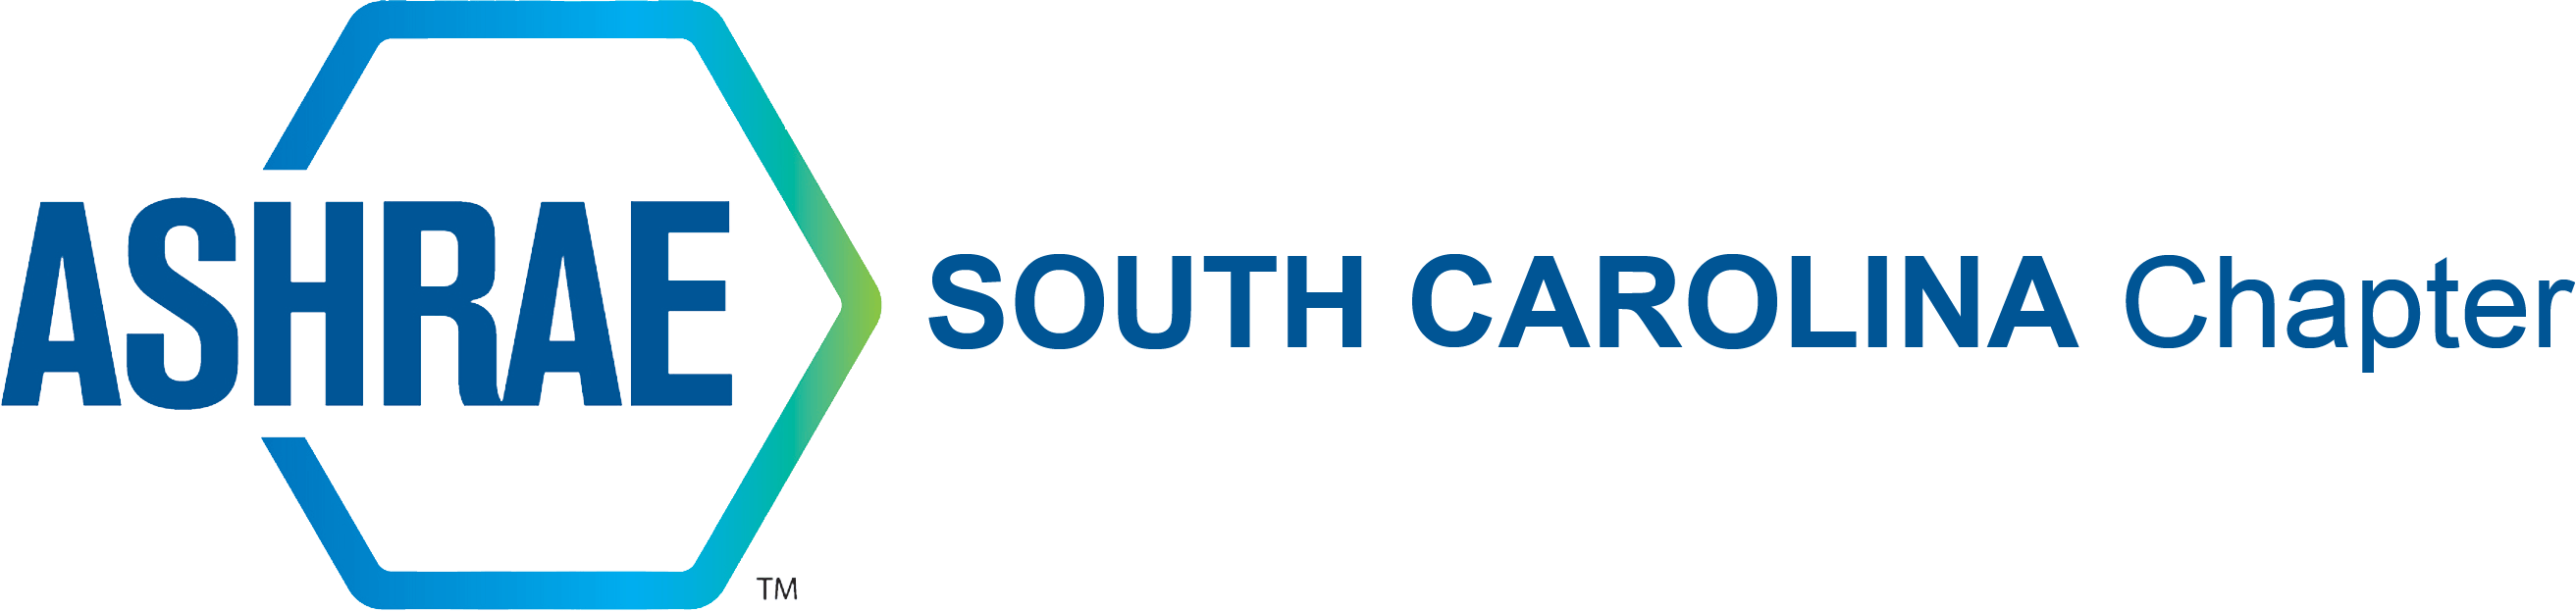 ASHRAE Logo - Sponsorship Opportunities - ASHRAE South Carolina Chapter